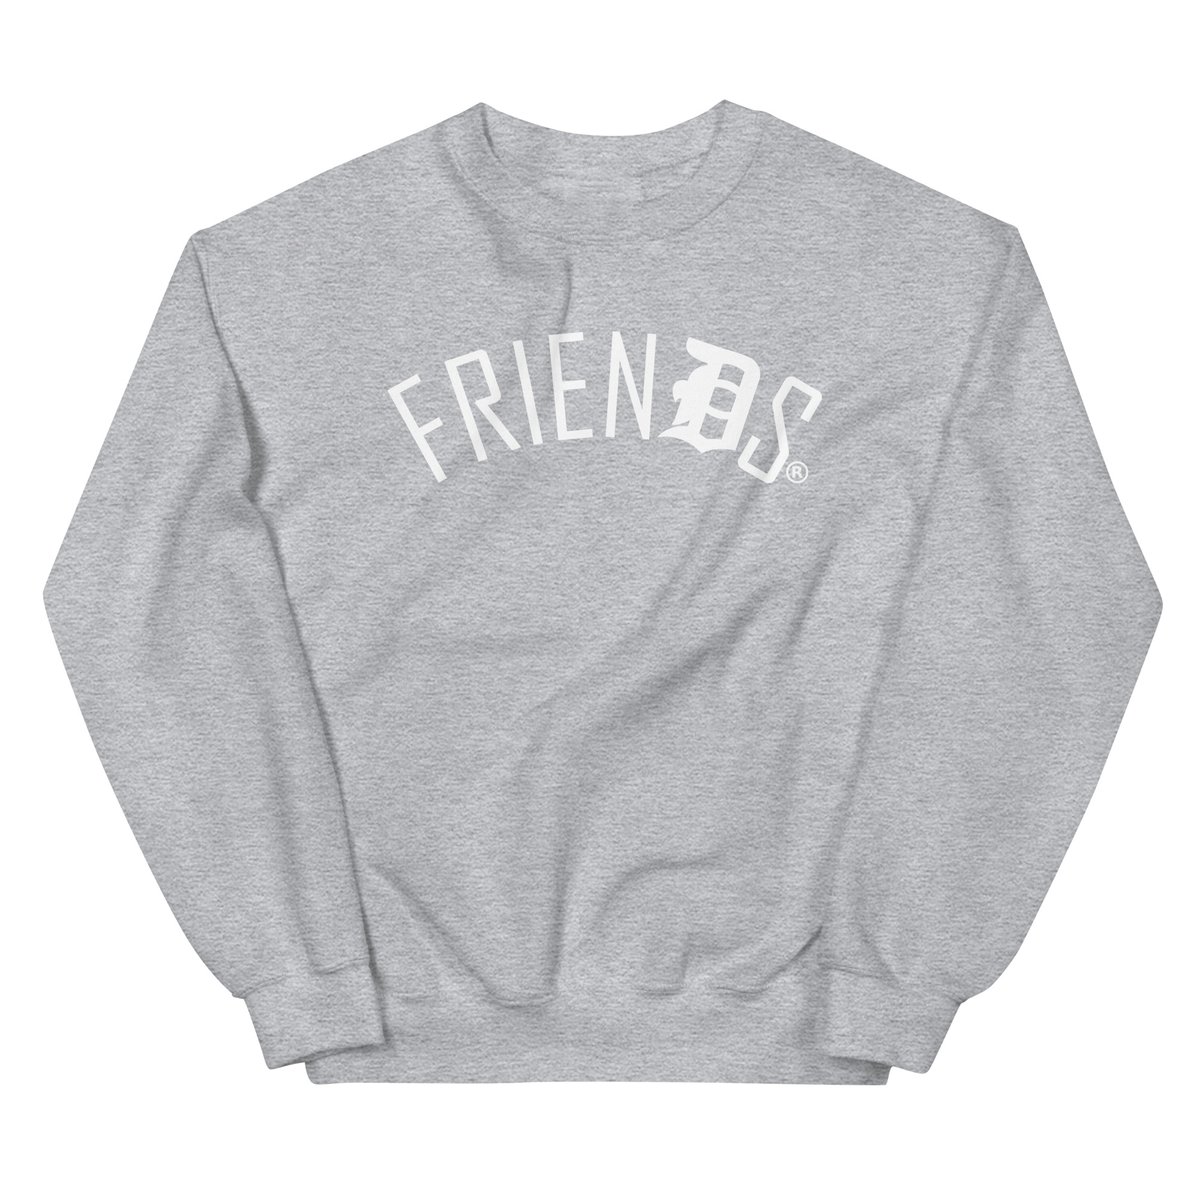 Image of Friends Crewneck Sweatshirt (5 colors)